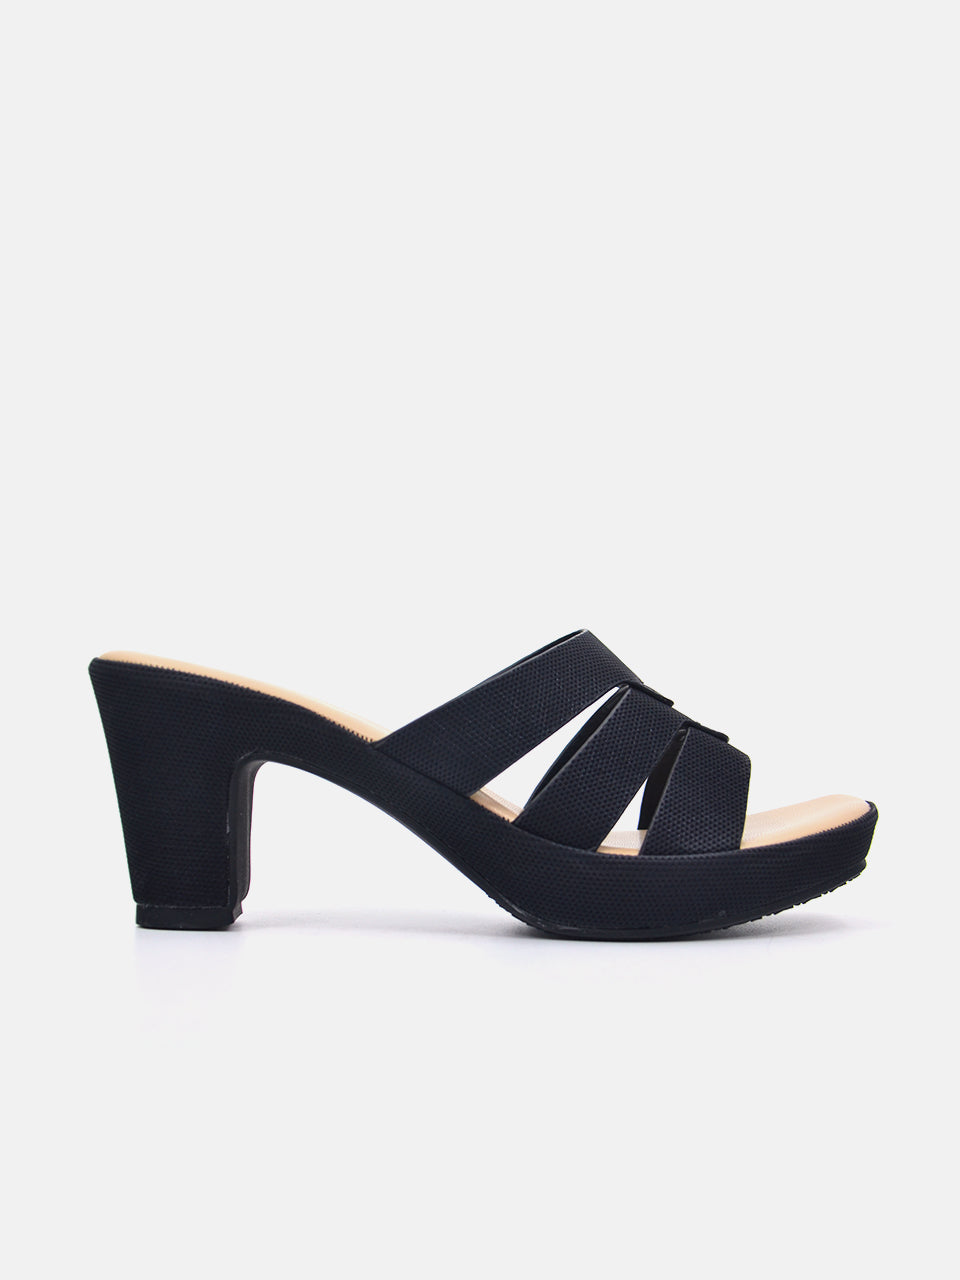 Michelle Morgan 114RC134 Women's Heeled Sandals #color_Black